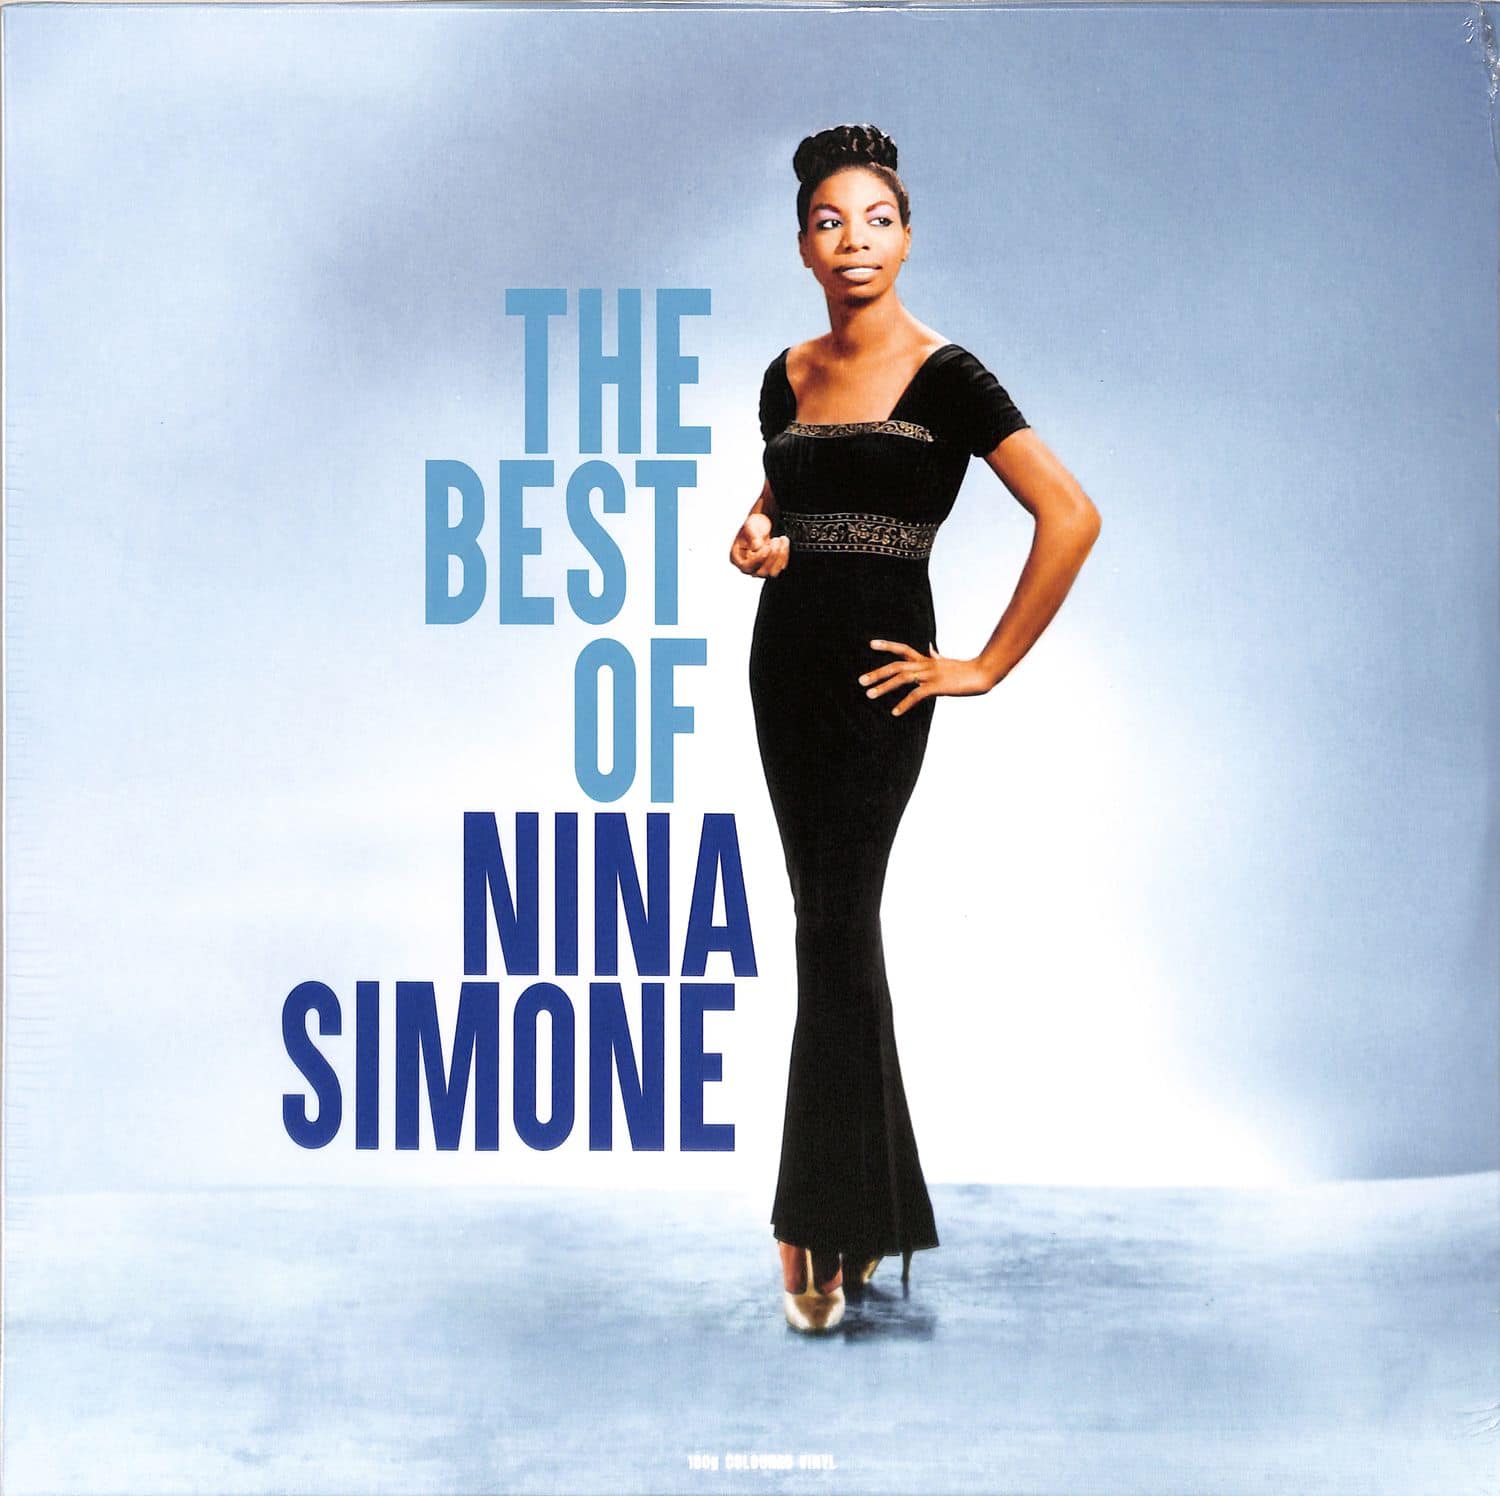 Nina Simone - THE BEST OF NINA SIMONE 